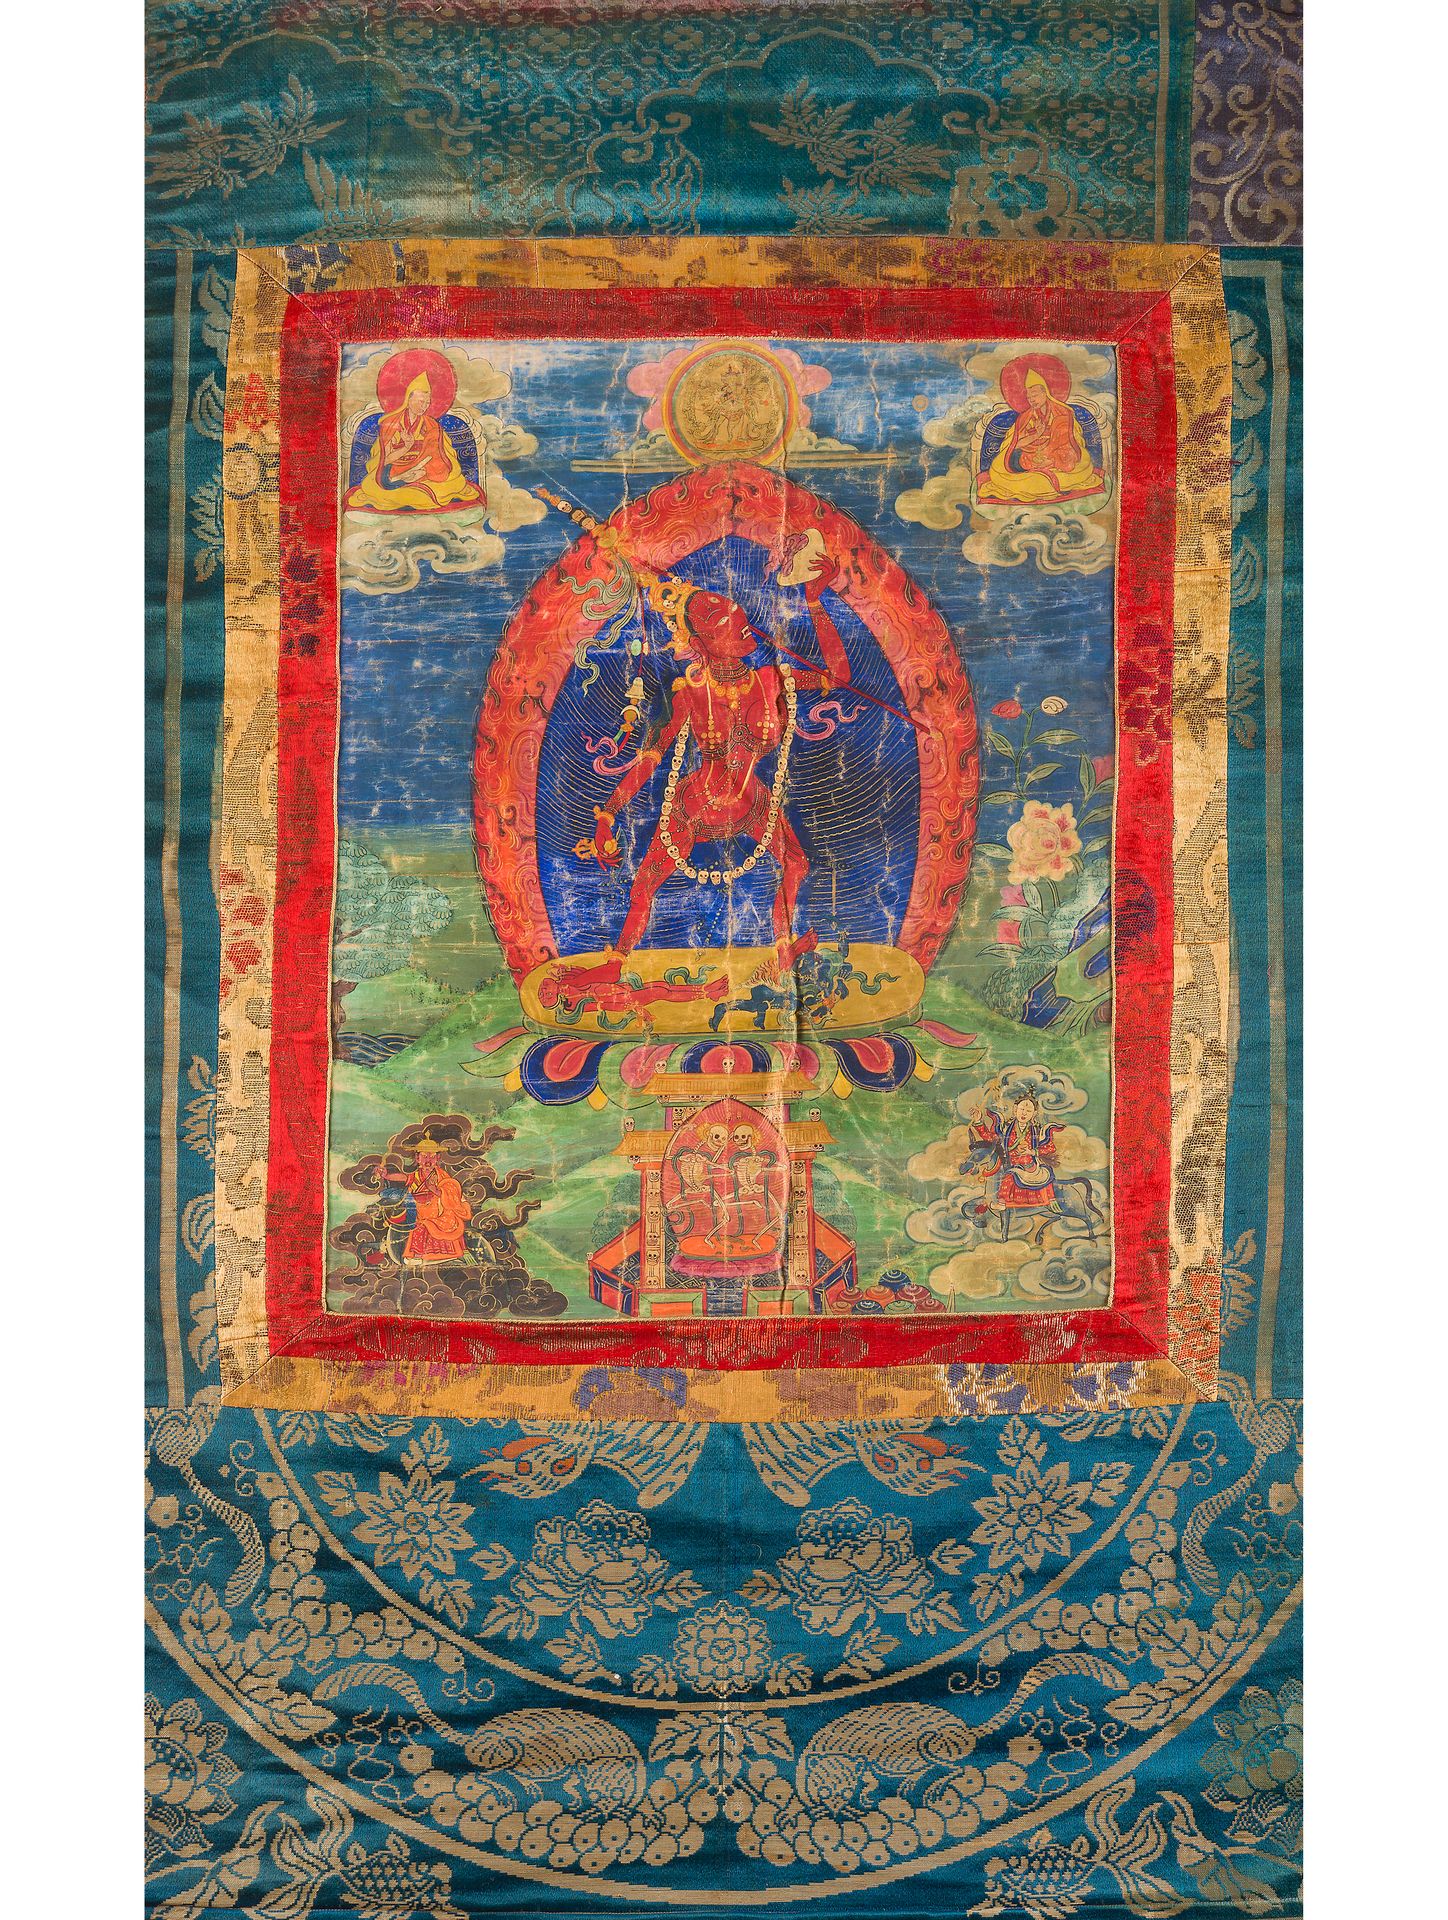 Null 一幅表现金刚亥母的唐卡。

西藏，19世纪

织物，颜料，原样

120 x 70厘米



出处 ：

纳丁-维诺-波斯特里收藏，巴黎。